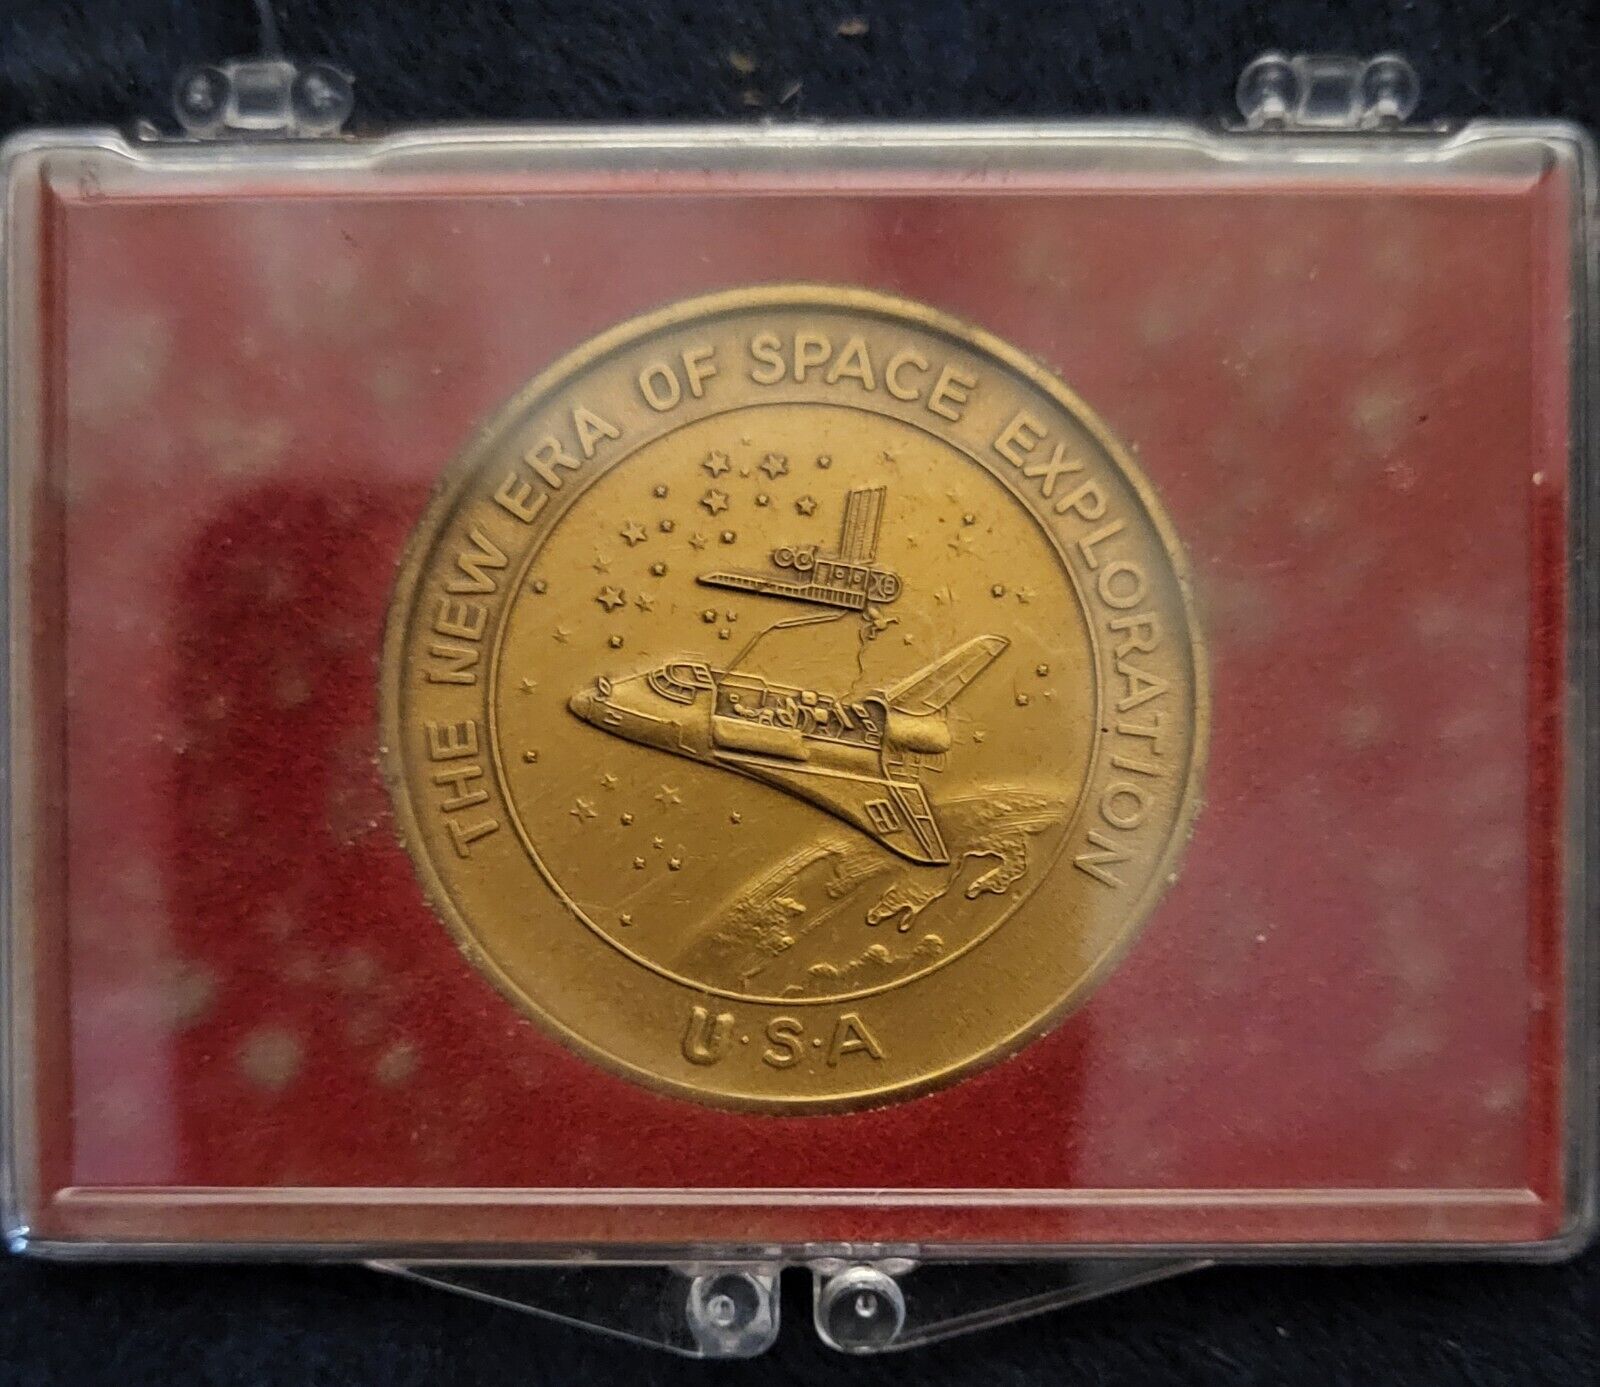 NASA: A New Era In Space Exploration Medallion, 61B Atlantis, Nov 26, 1985